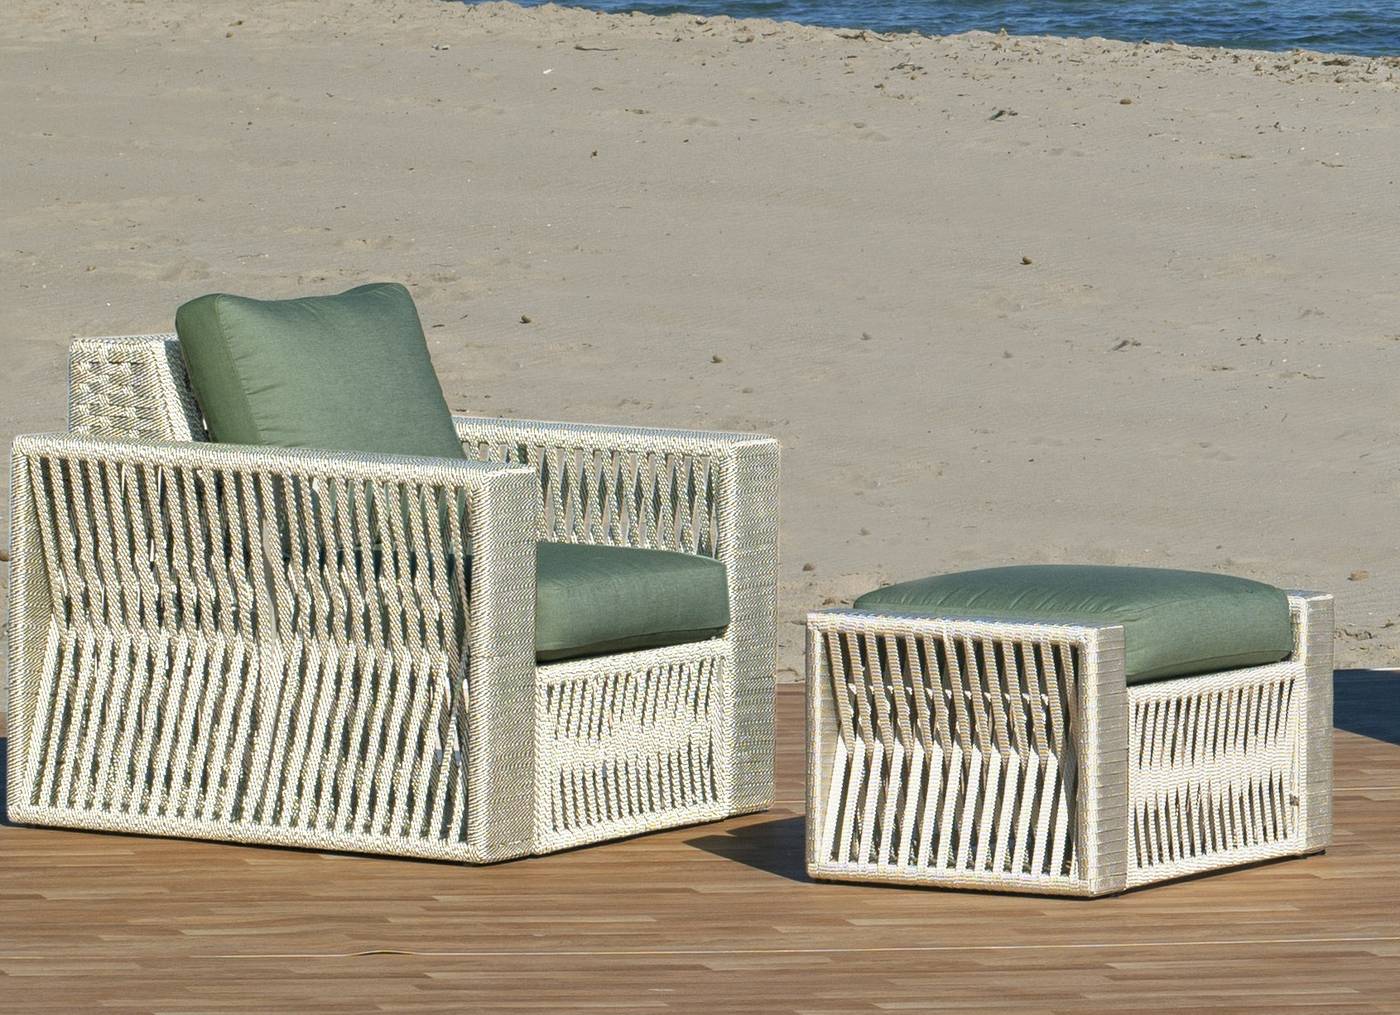 Set Aluminio Prusia-10 - Conjunto aluminio-cuerda: 1 sofá de 3 plazas + 2 sillones + 1 mesa de centro + 2 taburetes. Disponible en color blanco, gris, oro o champagne.